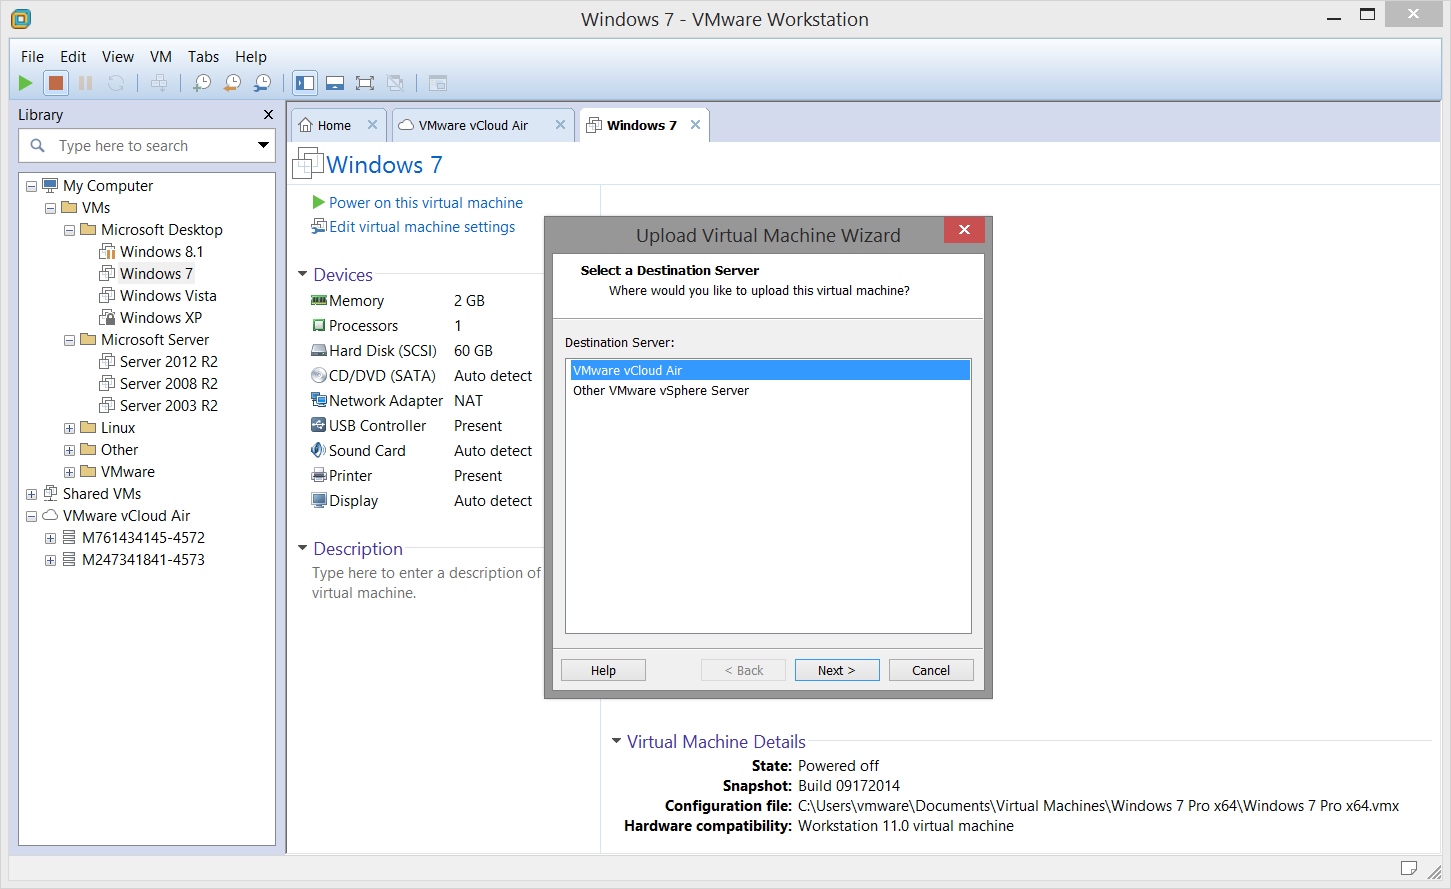 vmware workstation 12 keygen download